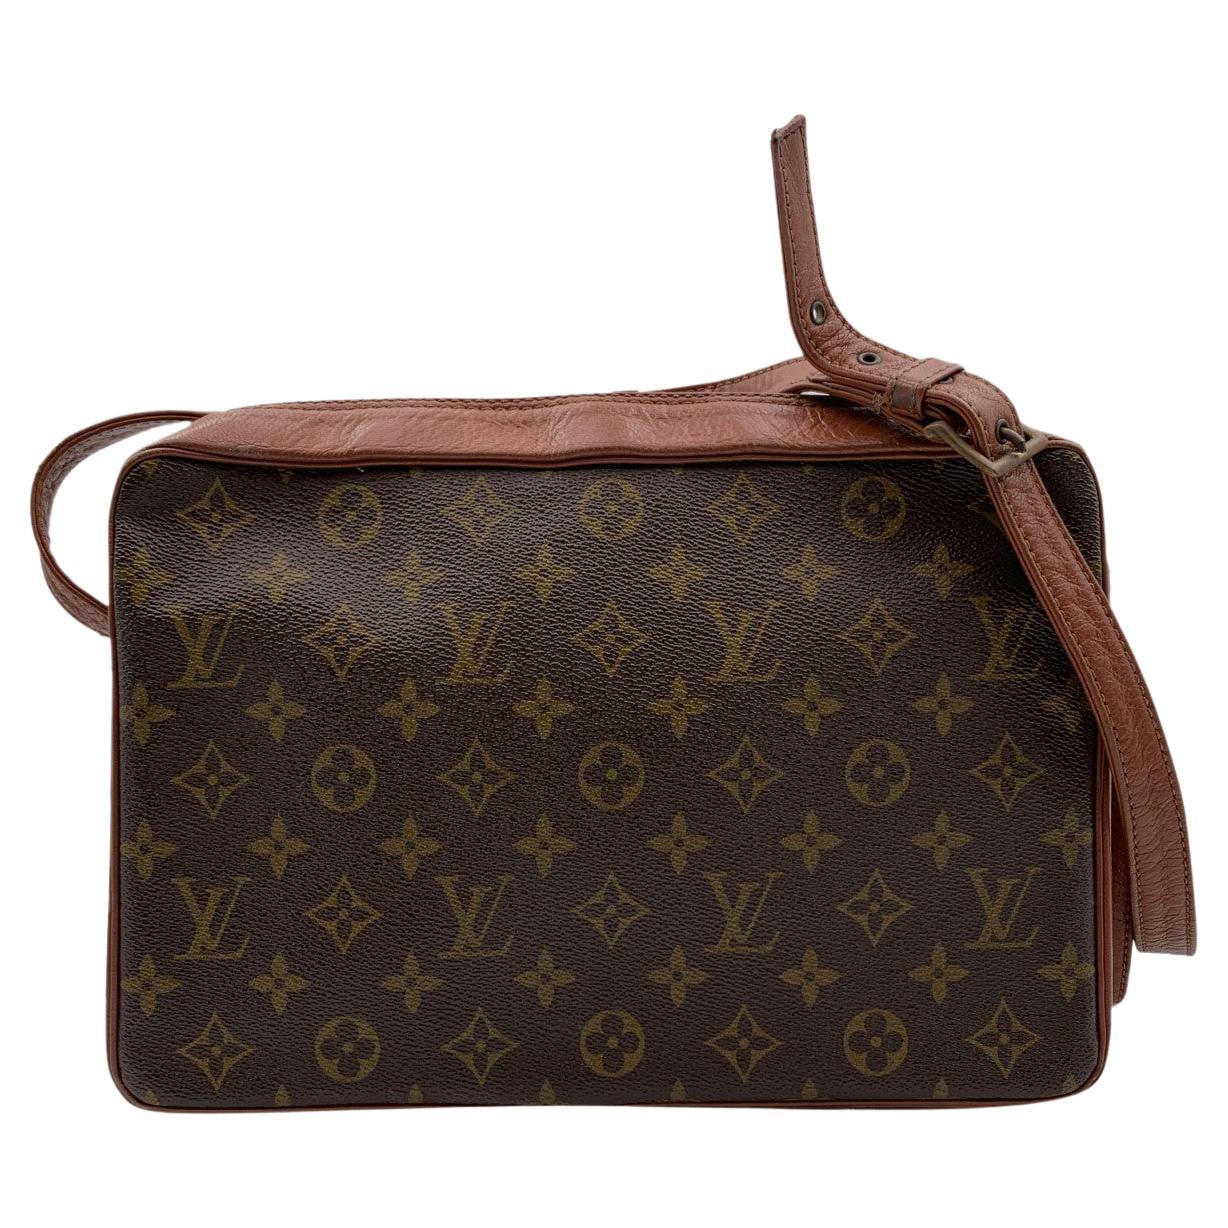 Vintage Louis Vuitton Sac Bandoliere Unsex Satchel/Crossbody Bag. Circa 1980  - pre date code. Heat stamped “Louis Vuitton Paris Made In…